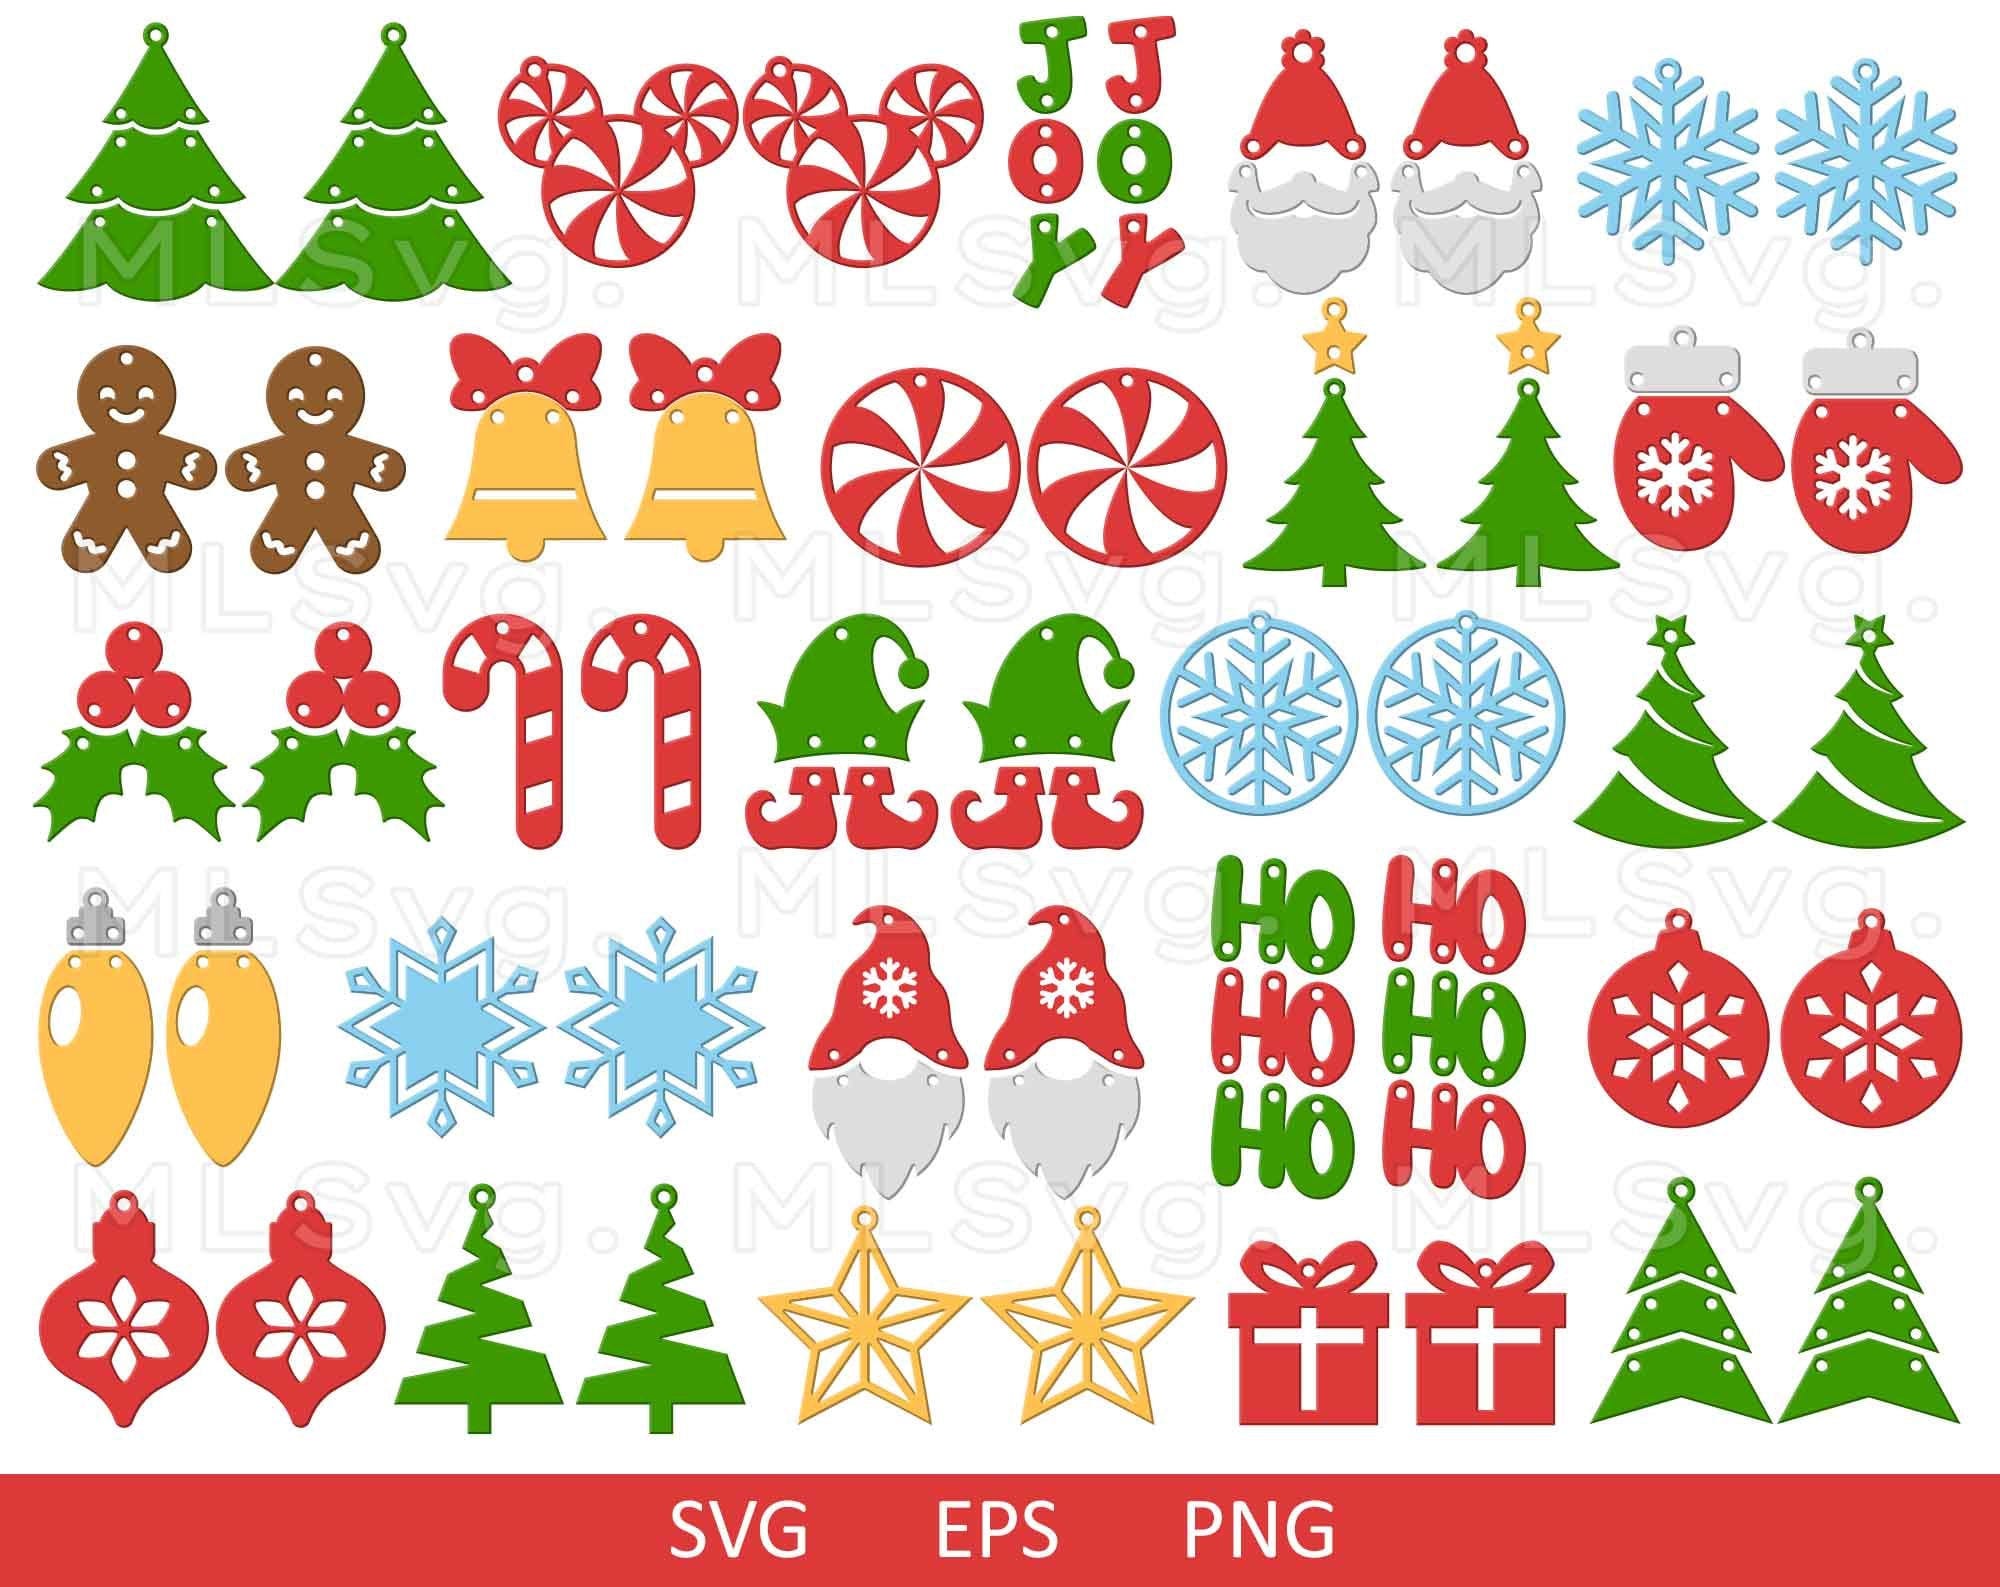 Christmas Earrings Bundle SVG, Earrings Bundle SVG, Earring Cut File, Faux Leather Earrings, File For Cricut, Glowforge Svg, Christmas Svg